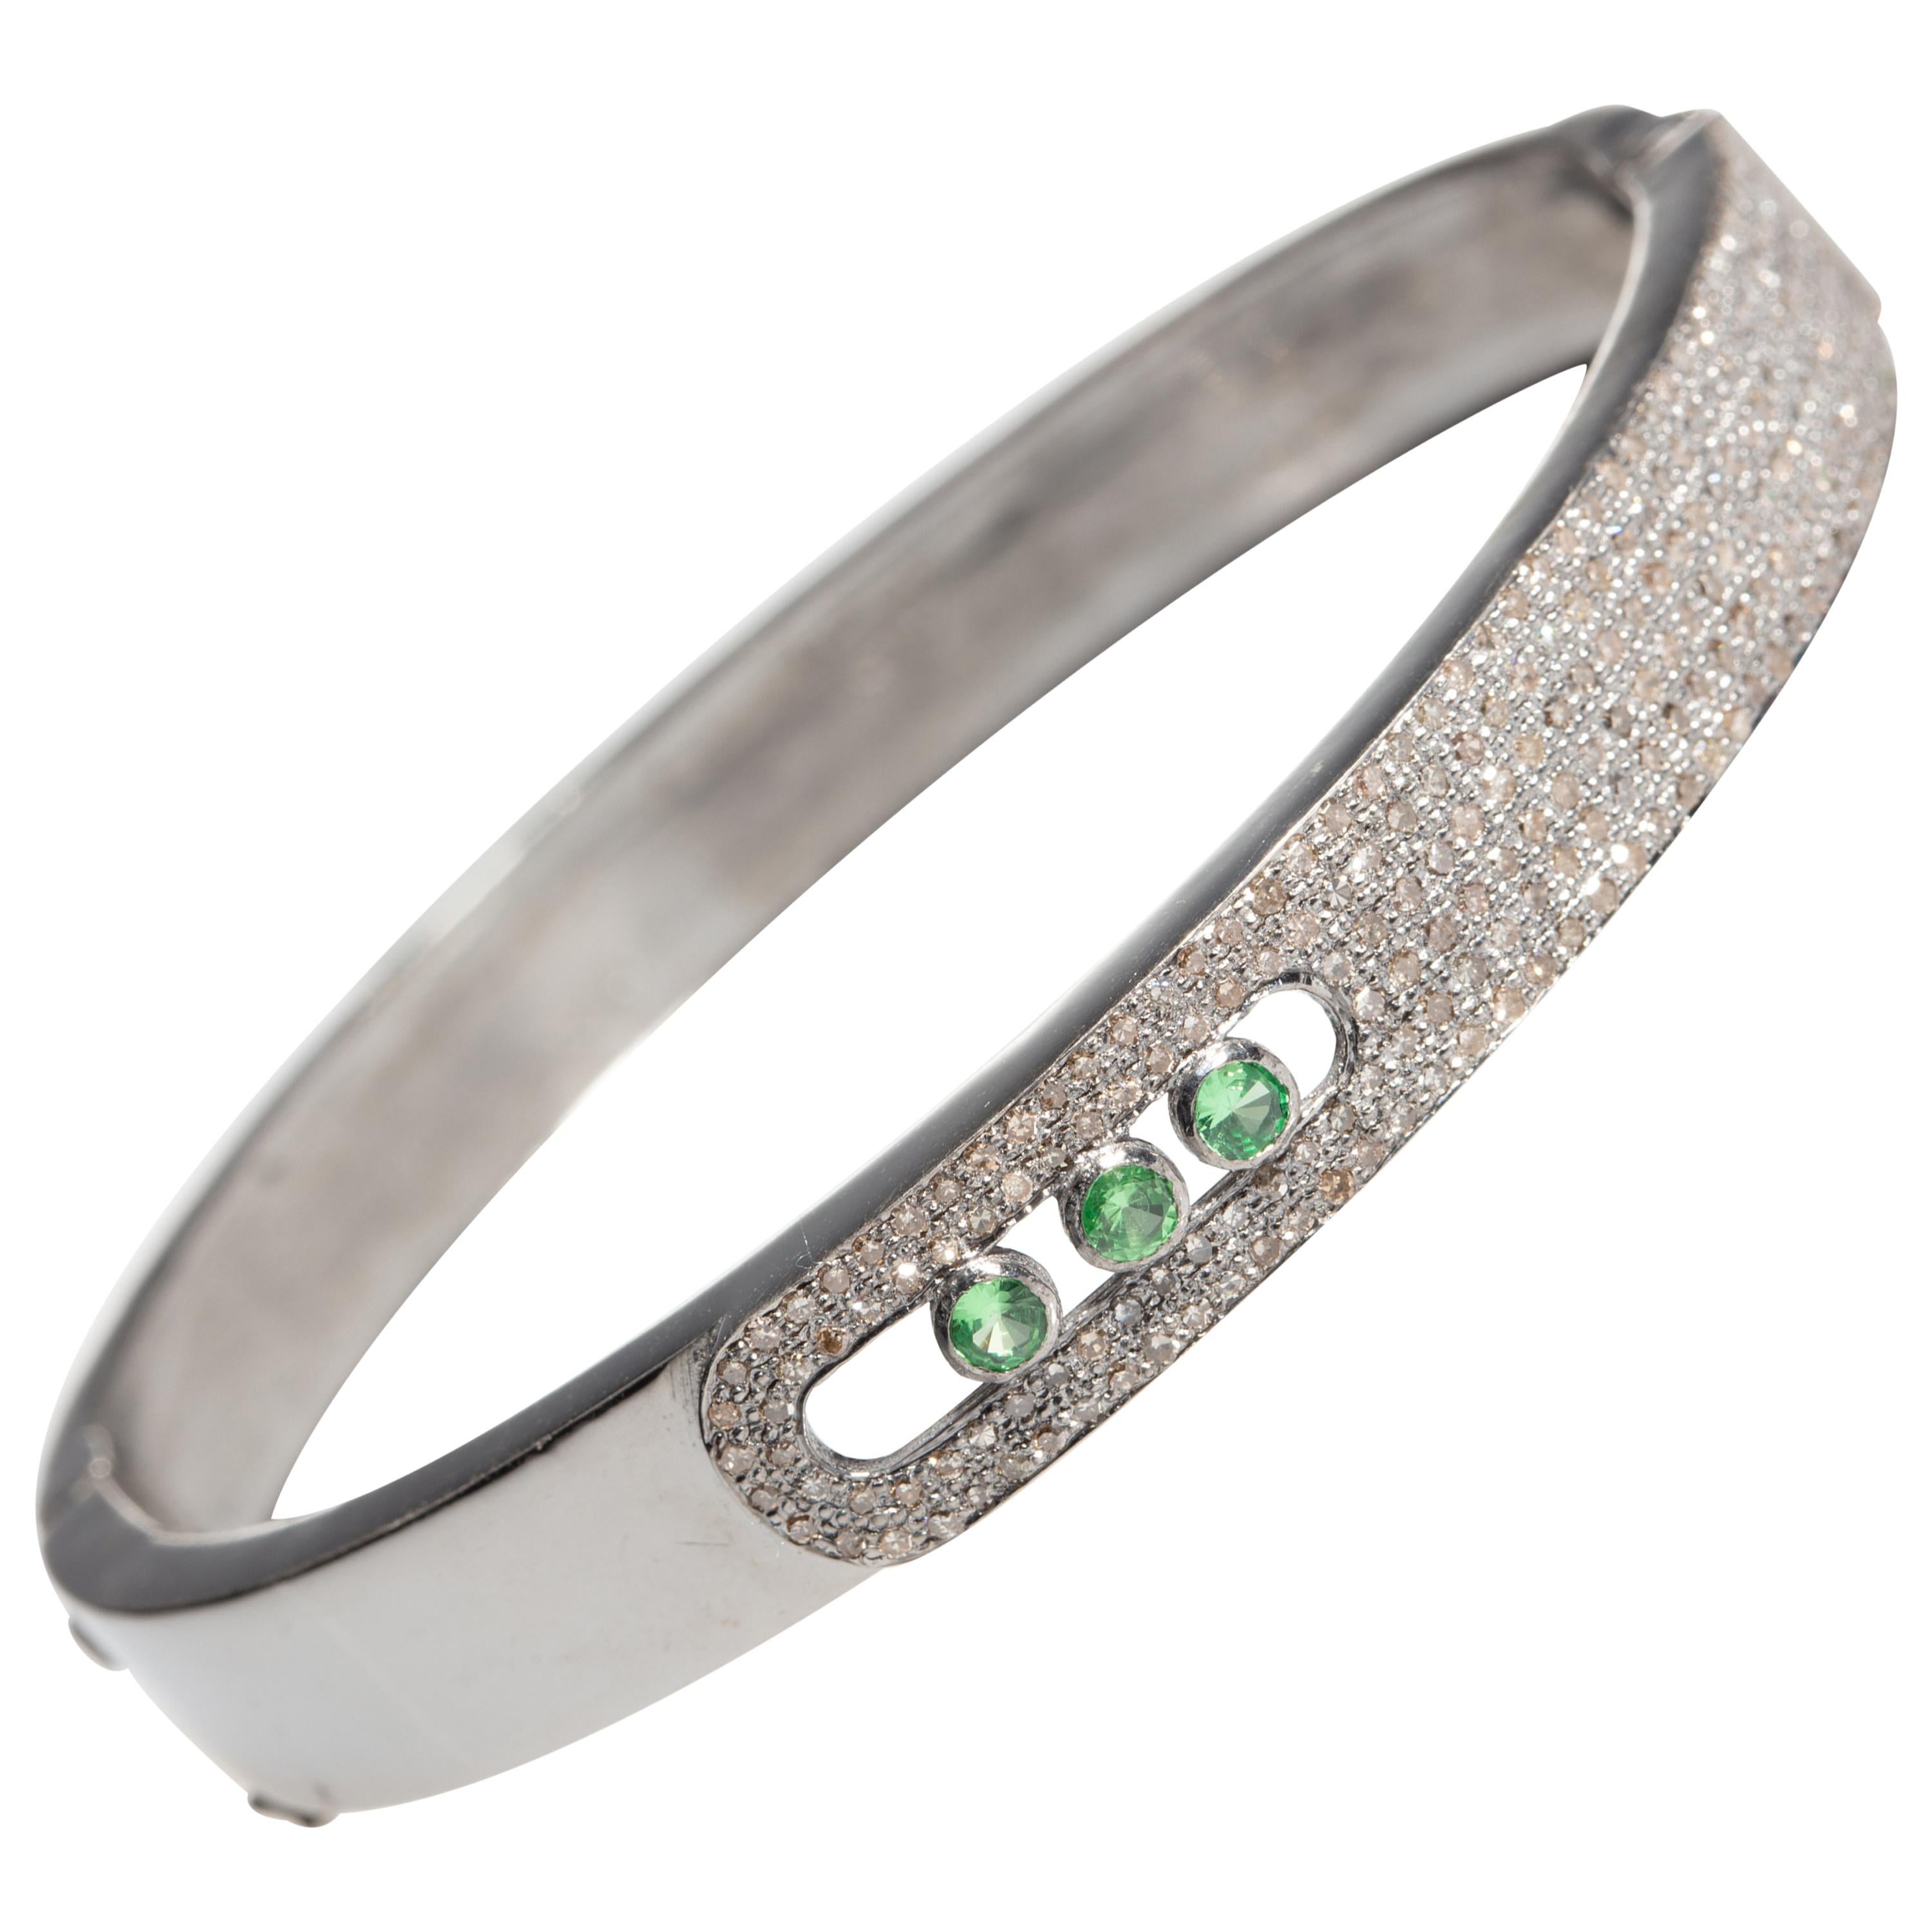 Pave` Diamond and Tsavorite Bangle Bracelet with Clasp